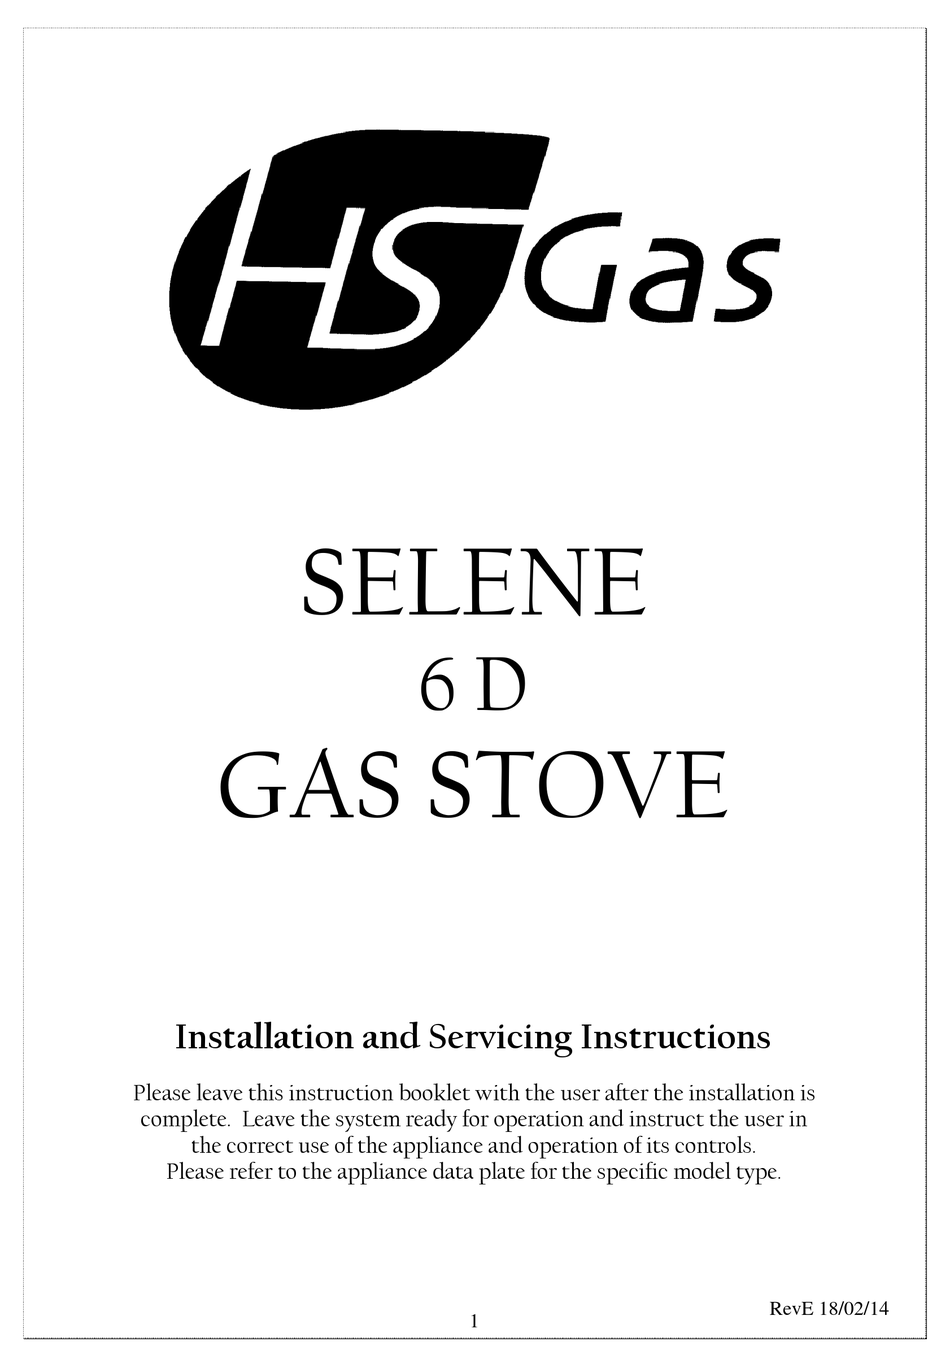 Hunter Stoves Hs Gas Selene 6 D Installation And Servicing Instructions Pdf Download Manualslib